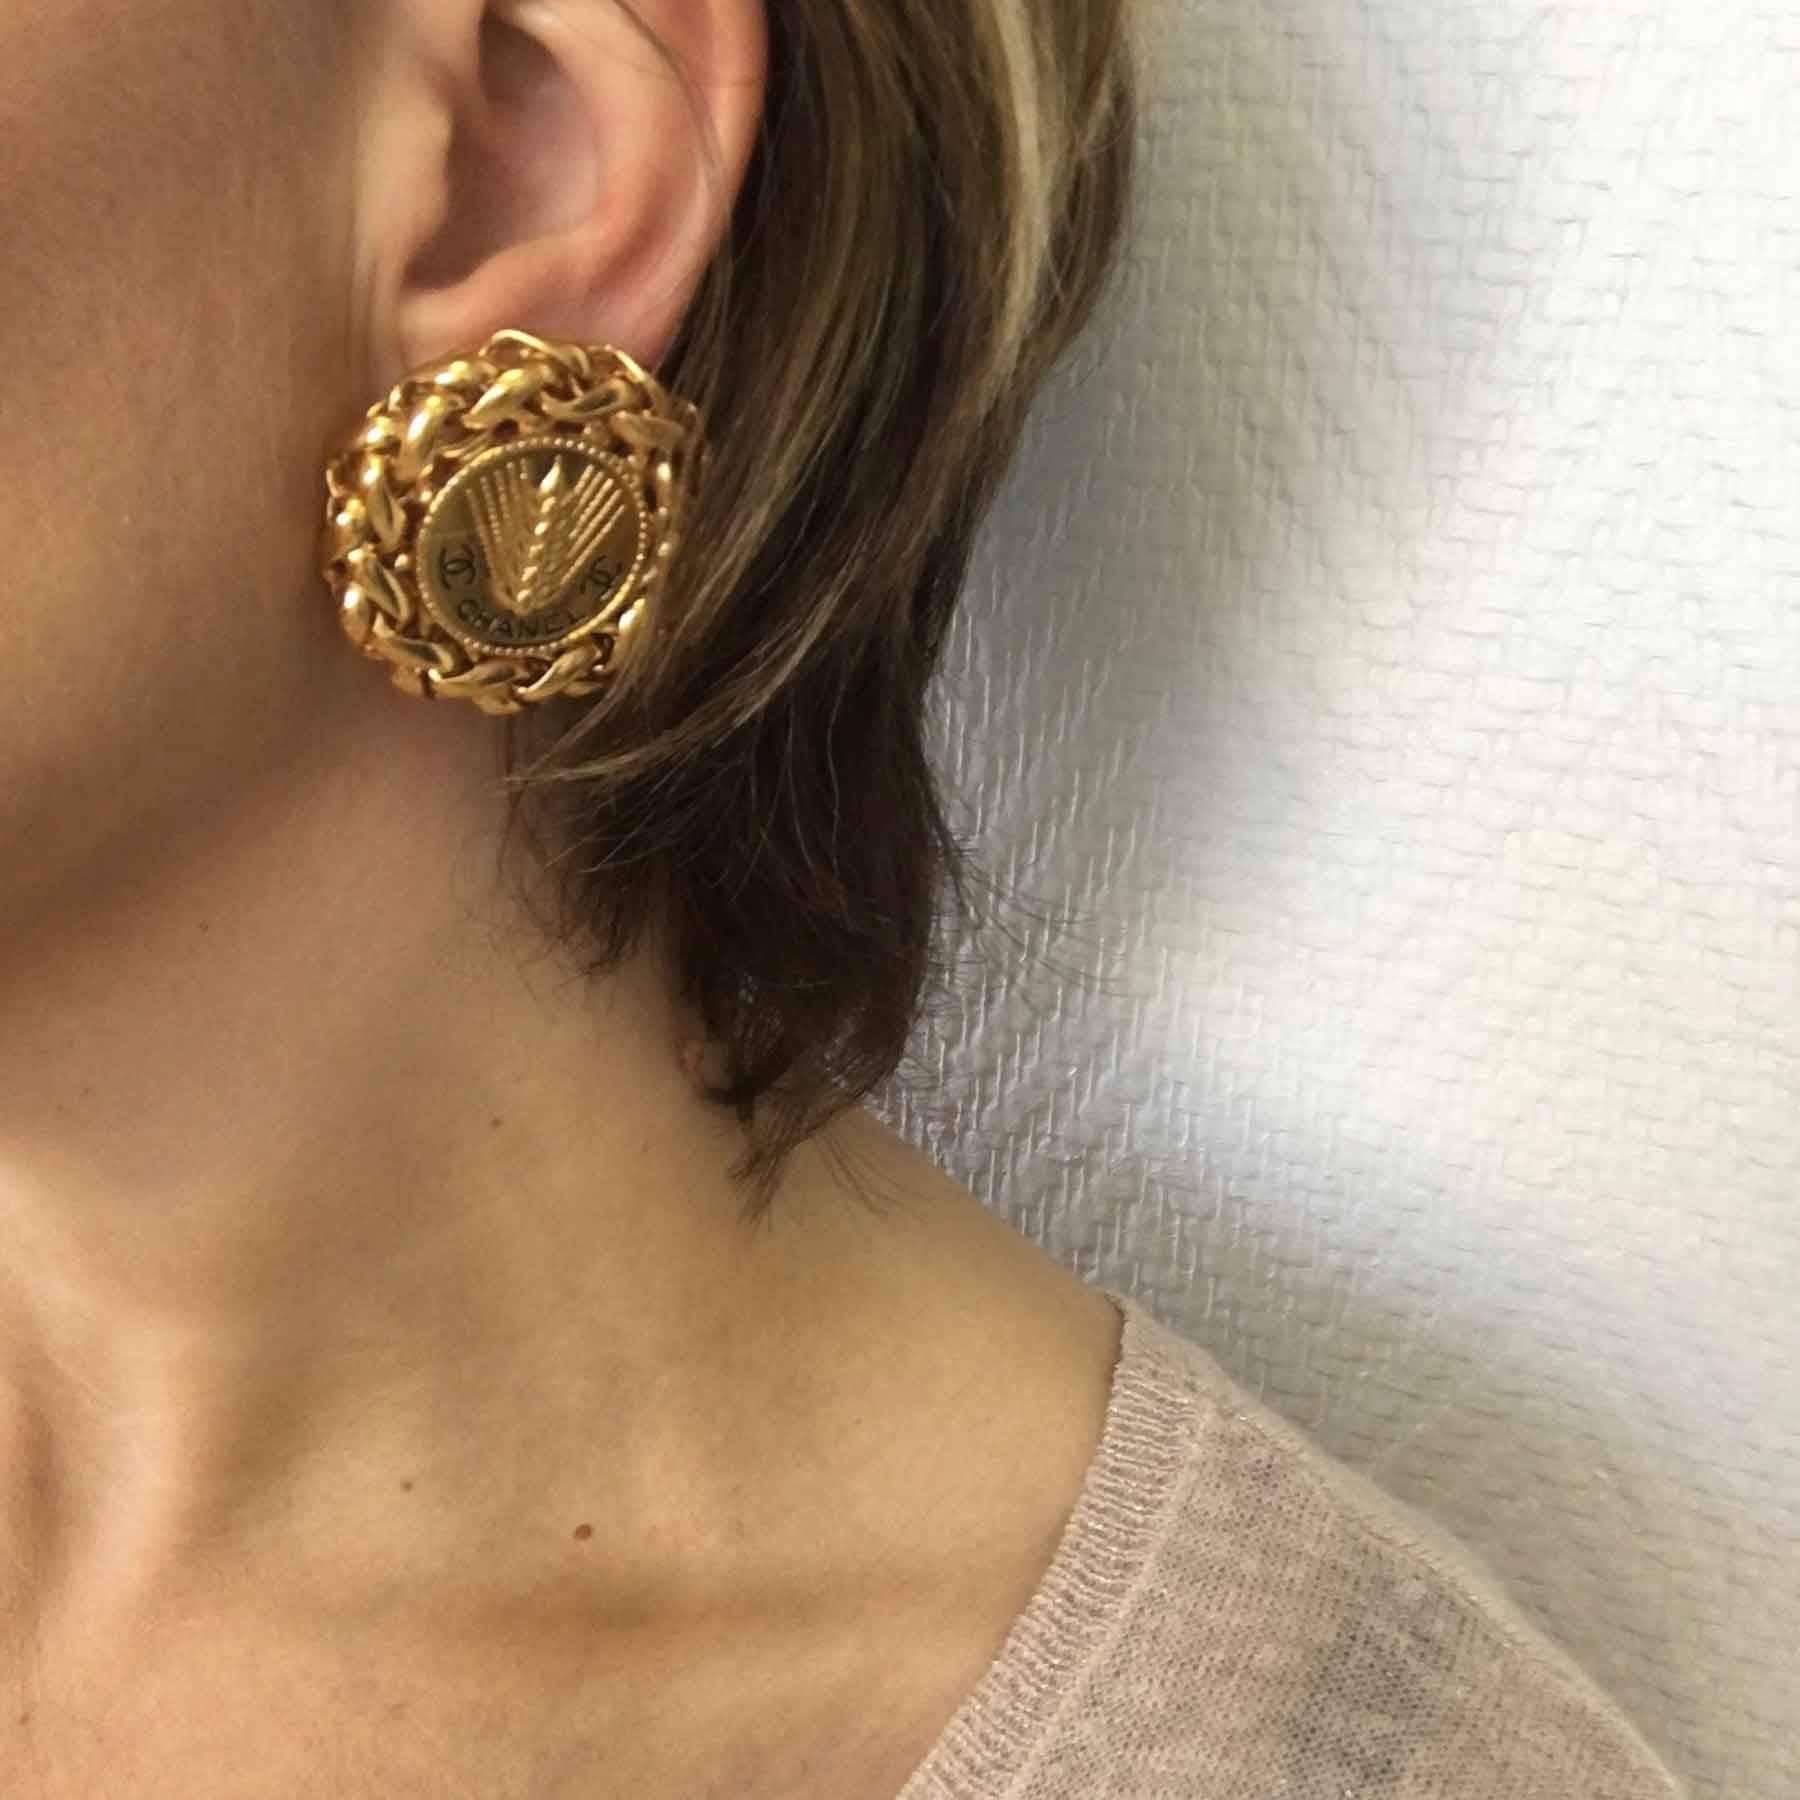 Women's CHANEL Vintage Clip-on 'Ear of Wheat' Earrings in gold-plated metal